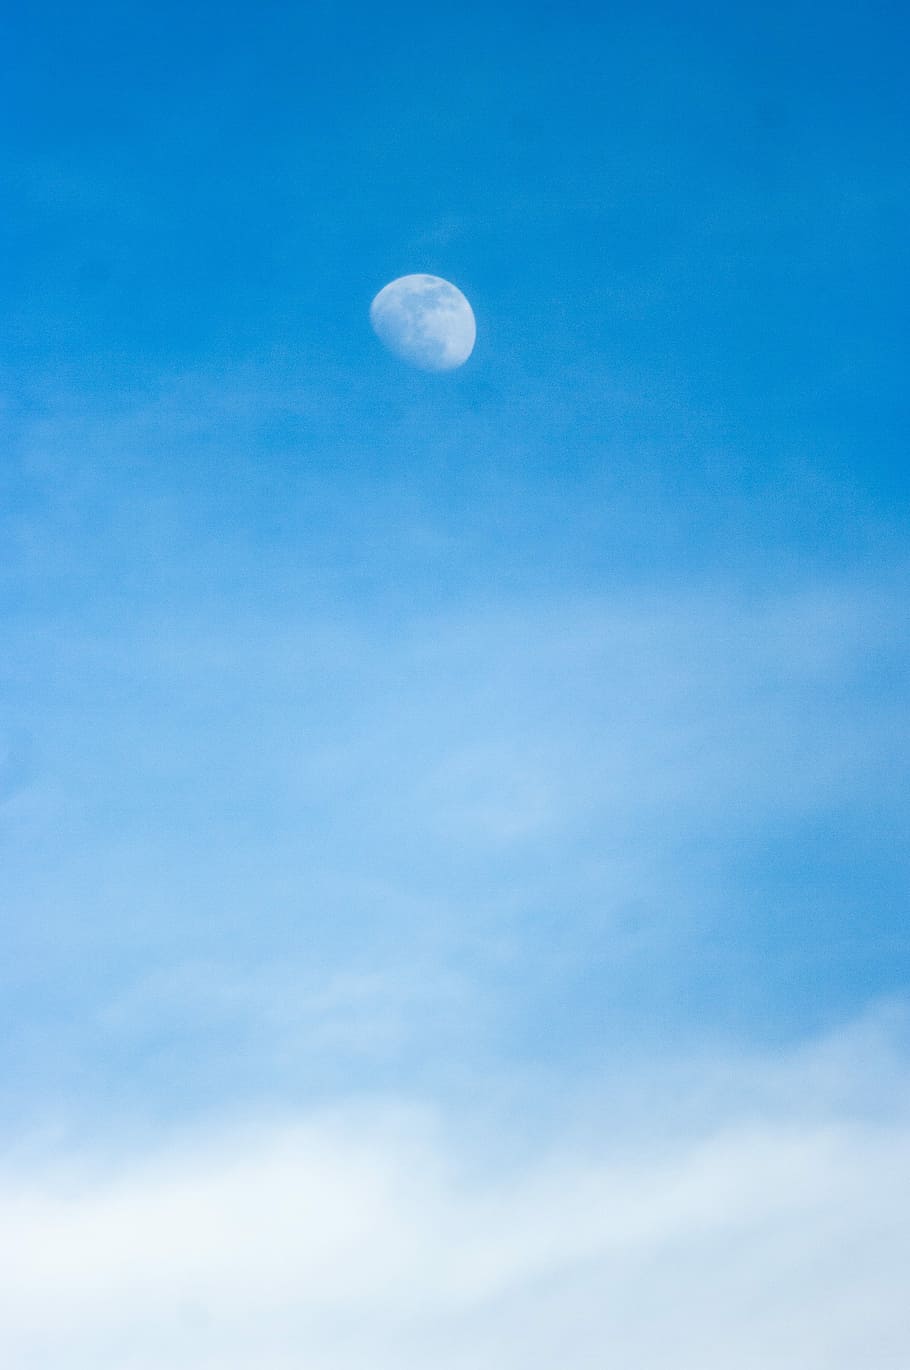 Moon, Moonlight, Nice, Cloud, sky, cloudy sky, mood, blue, clear, strange